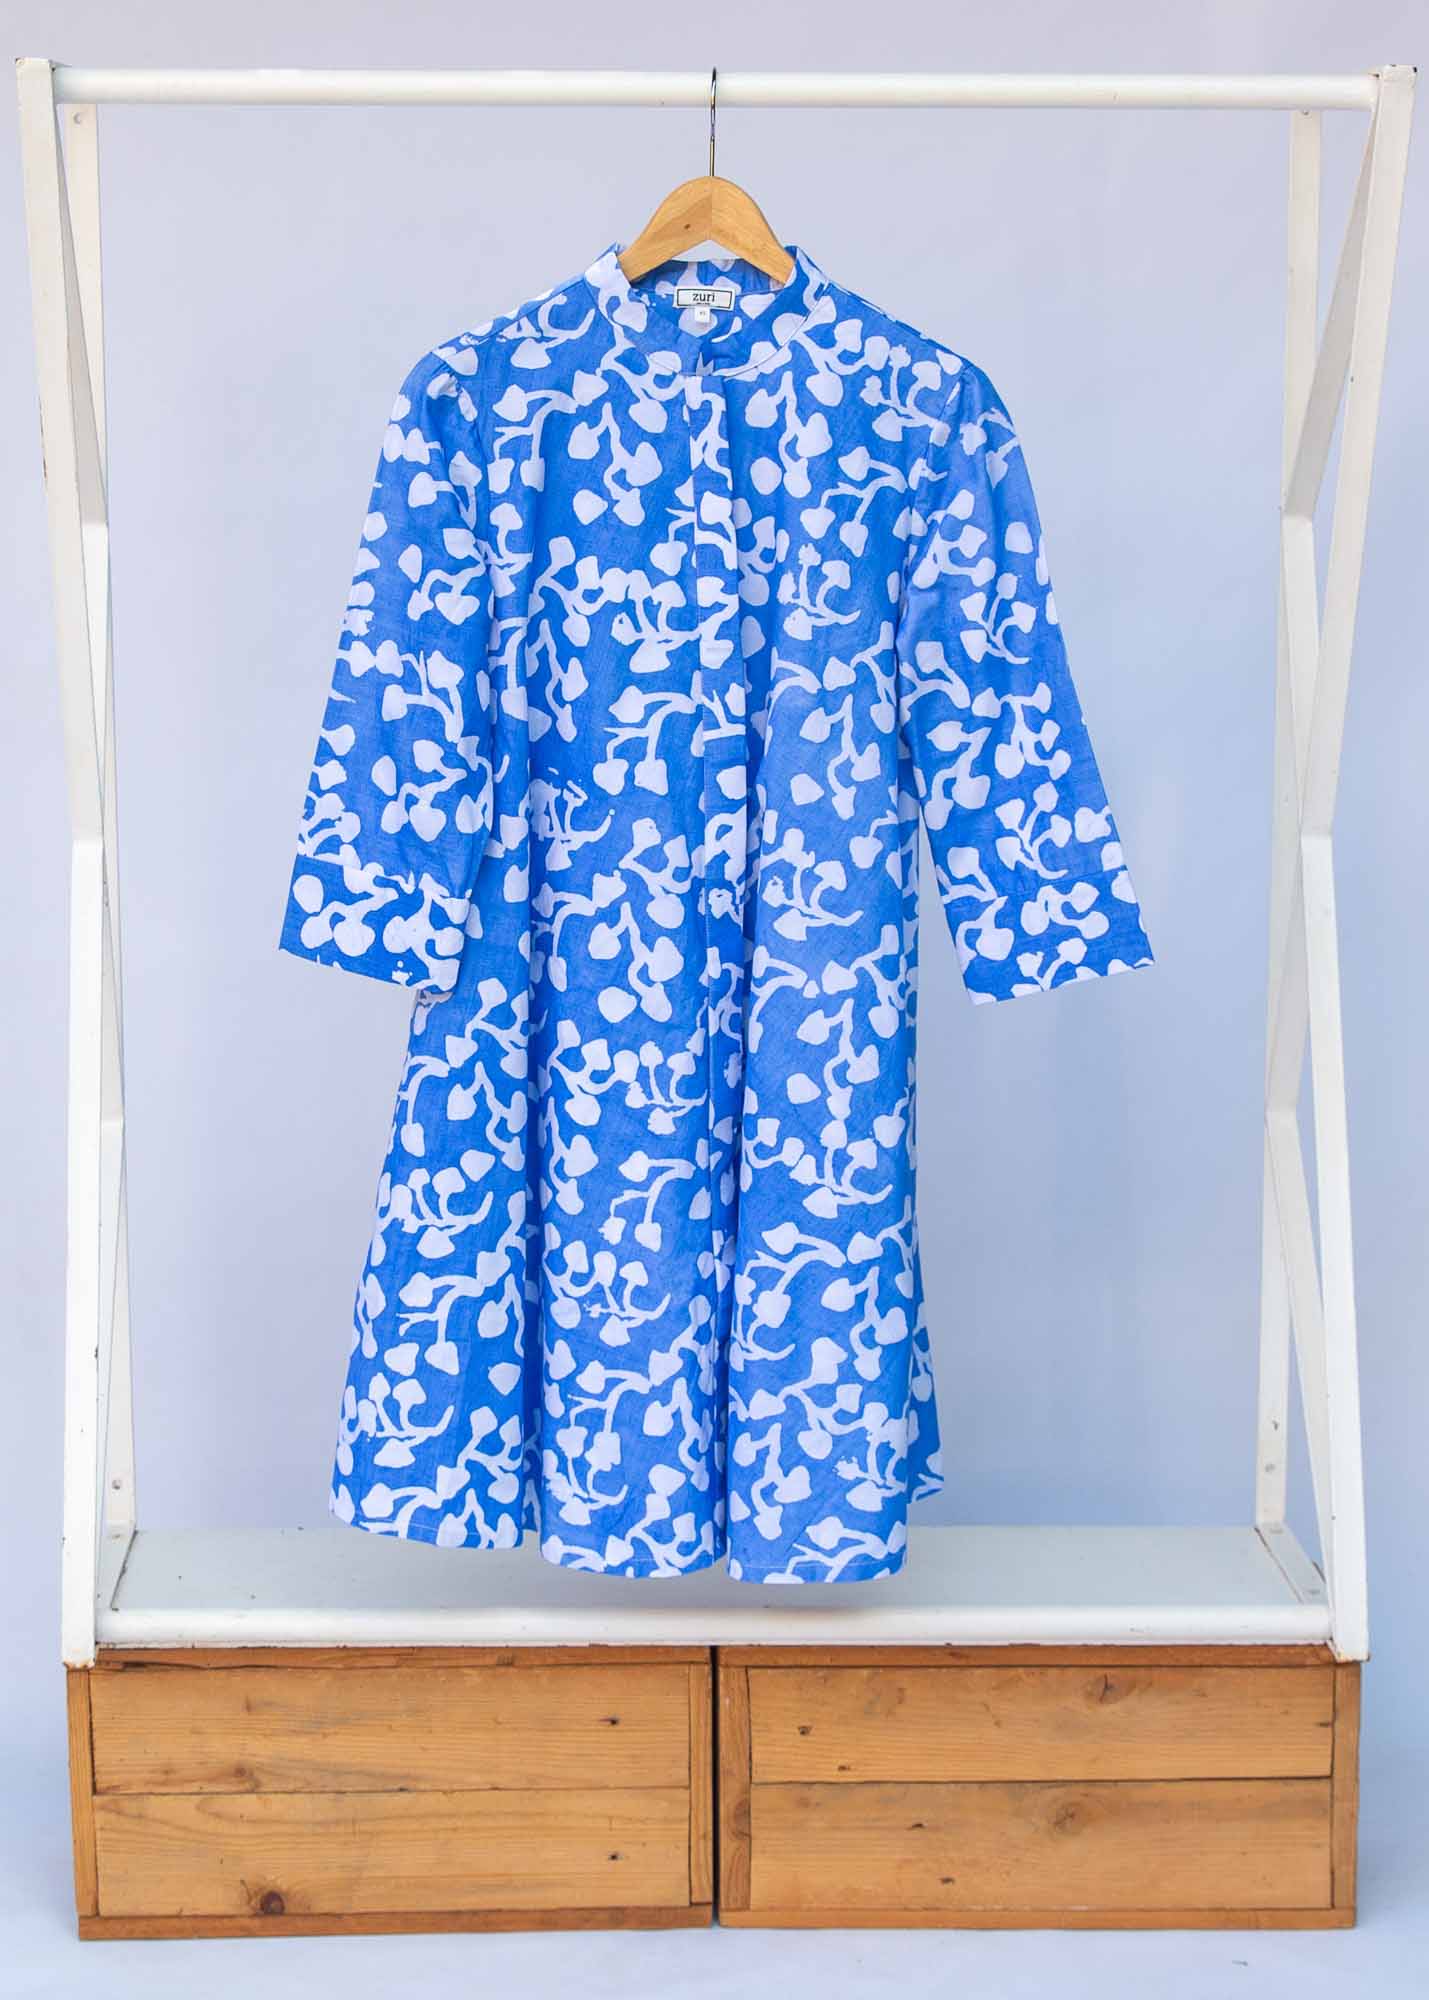 Display of blue and white leaf print dress